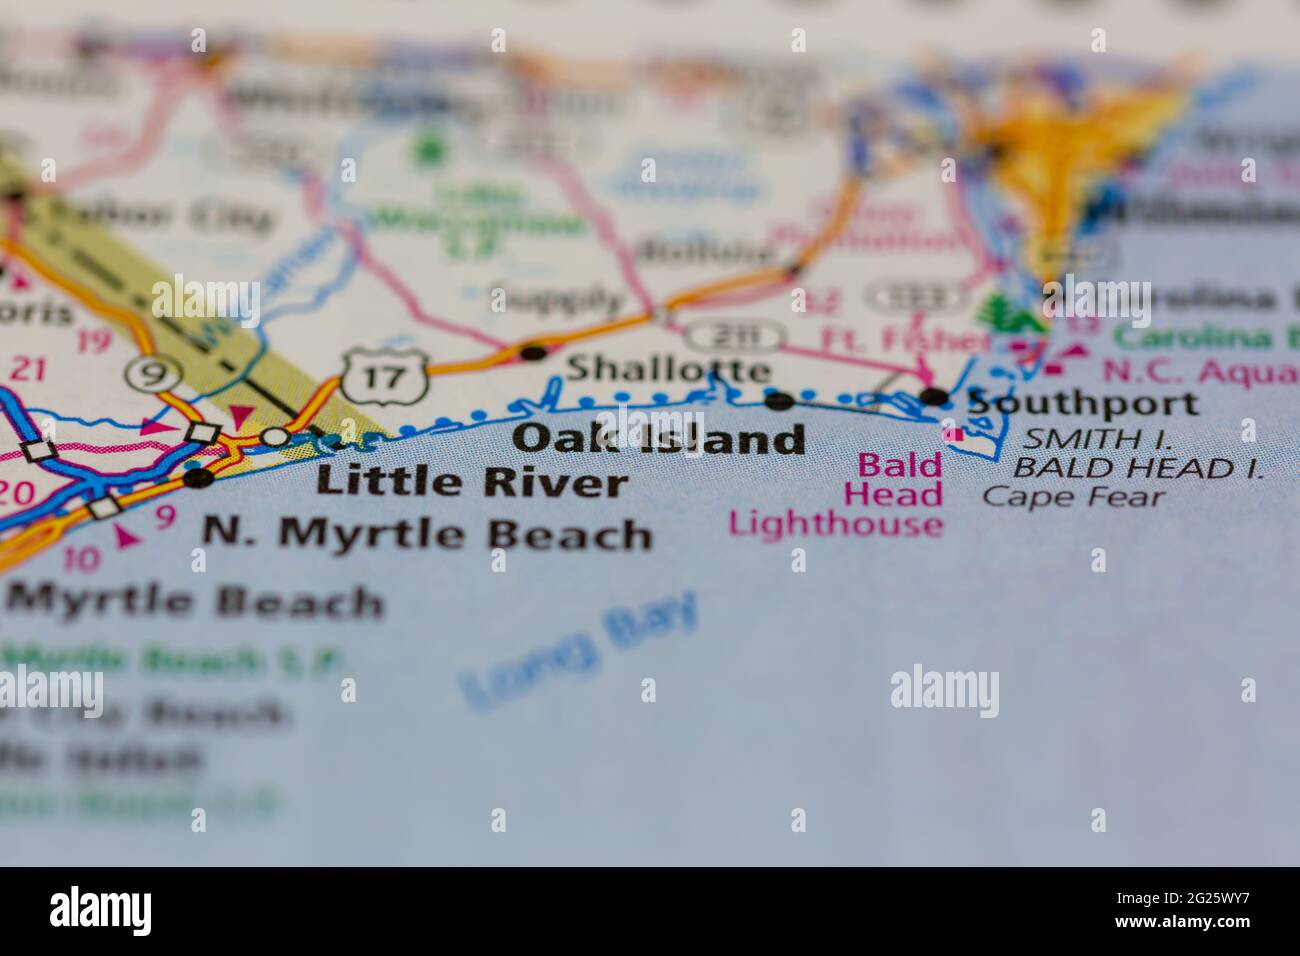 Oak Island South Carolina USA Shown on a Road map or Geography map